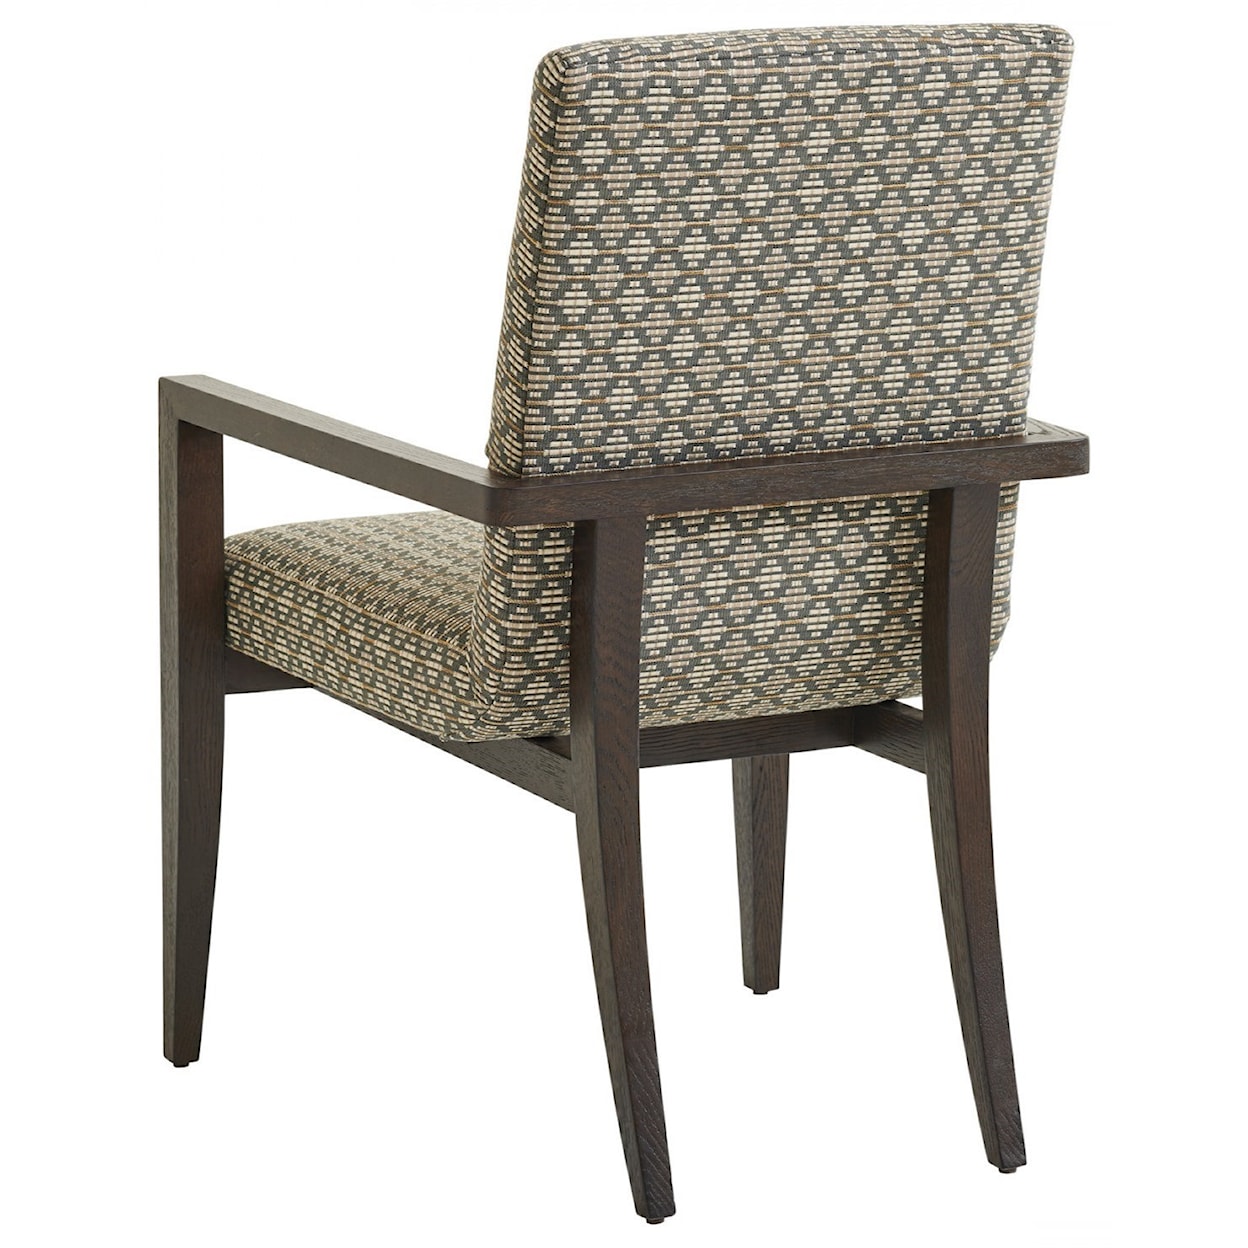 Barclay Butera Park City Glenwild Customizable Upholstered Arm Chair